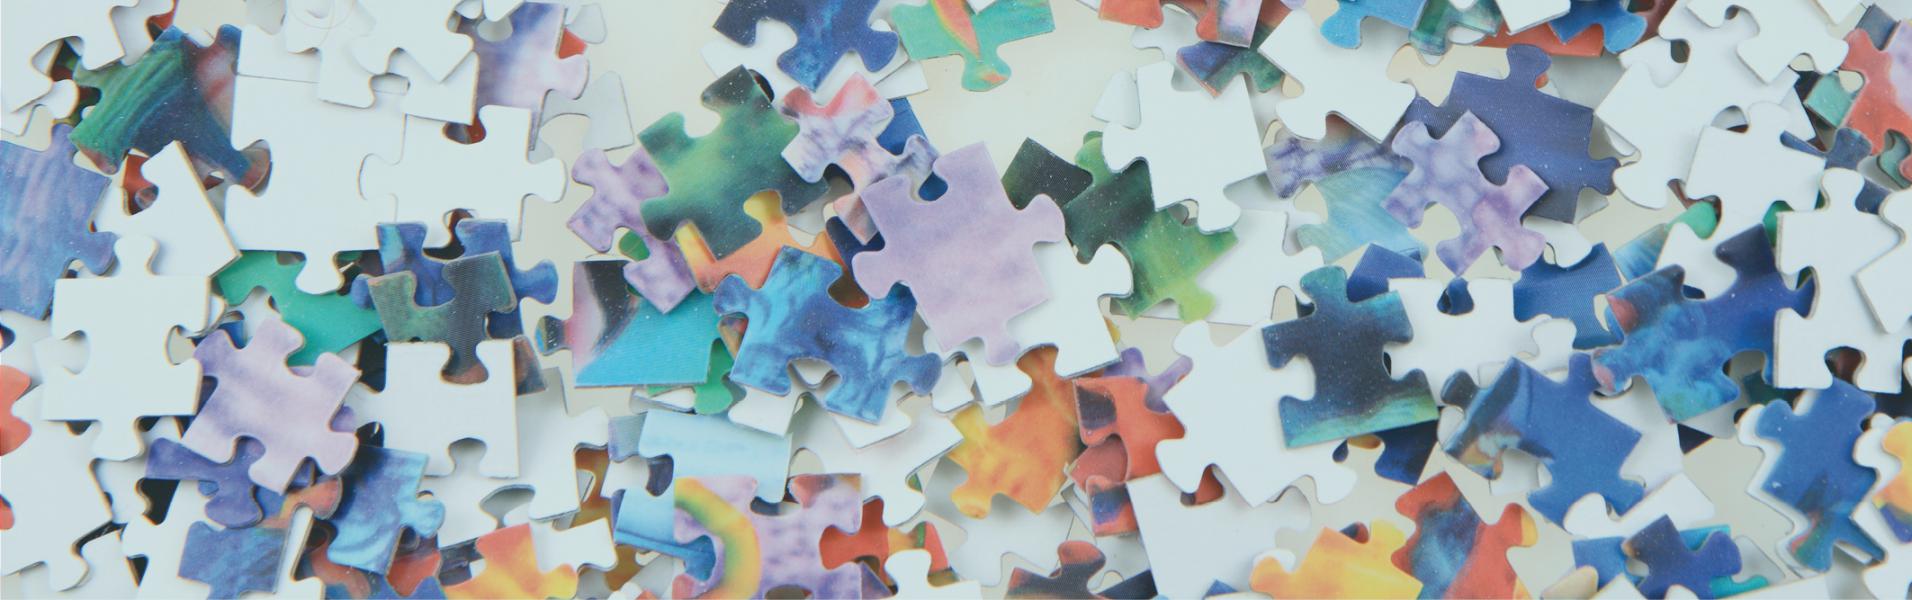  Puzzle pieces